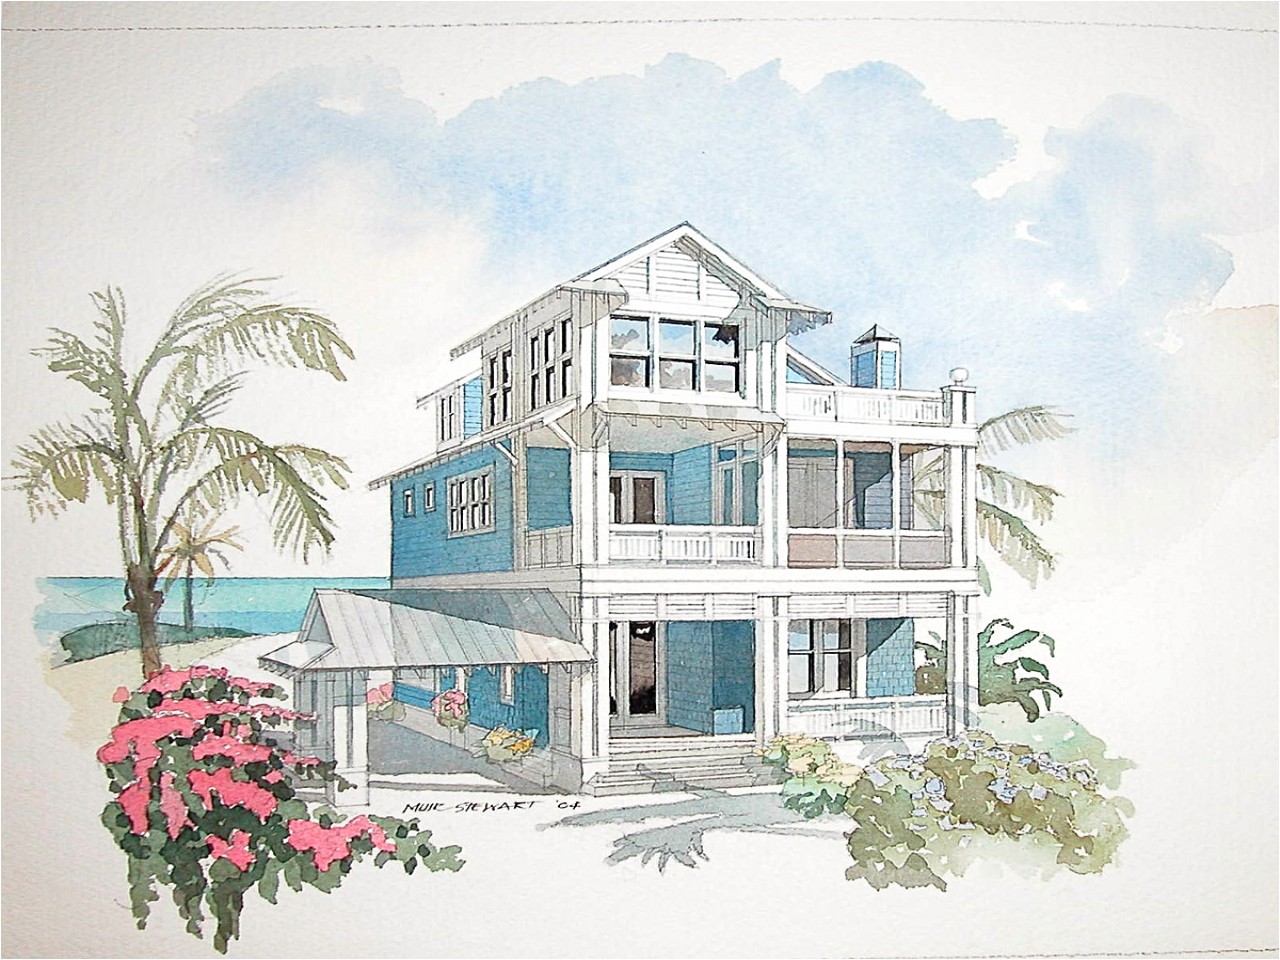 Coastal Home Plans On Pilings Coastal Home Design Plans Beach House Plans On Pilings